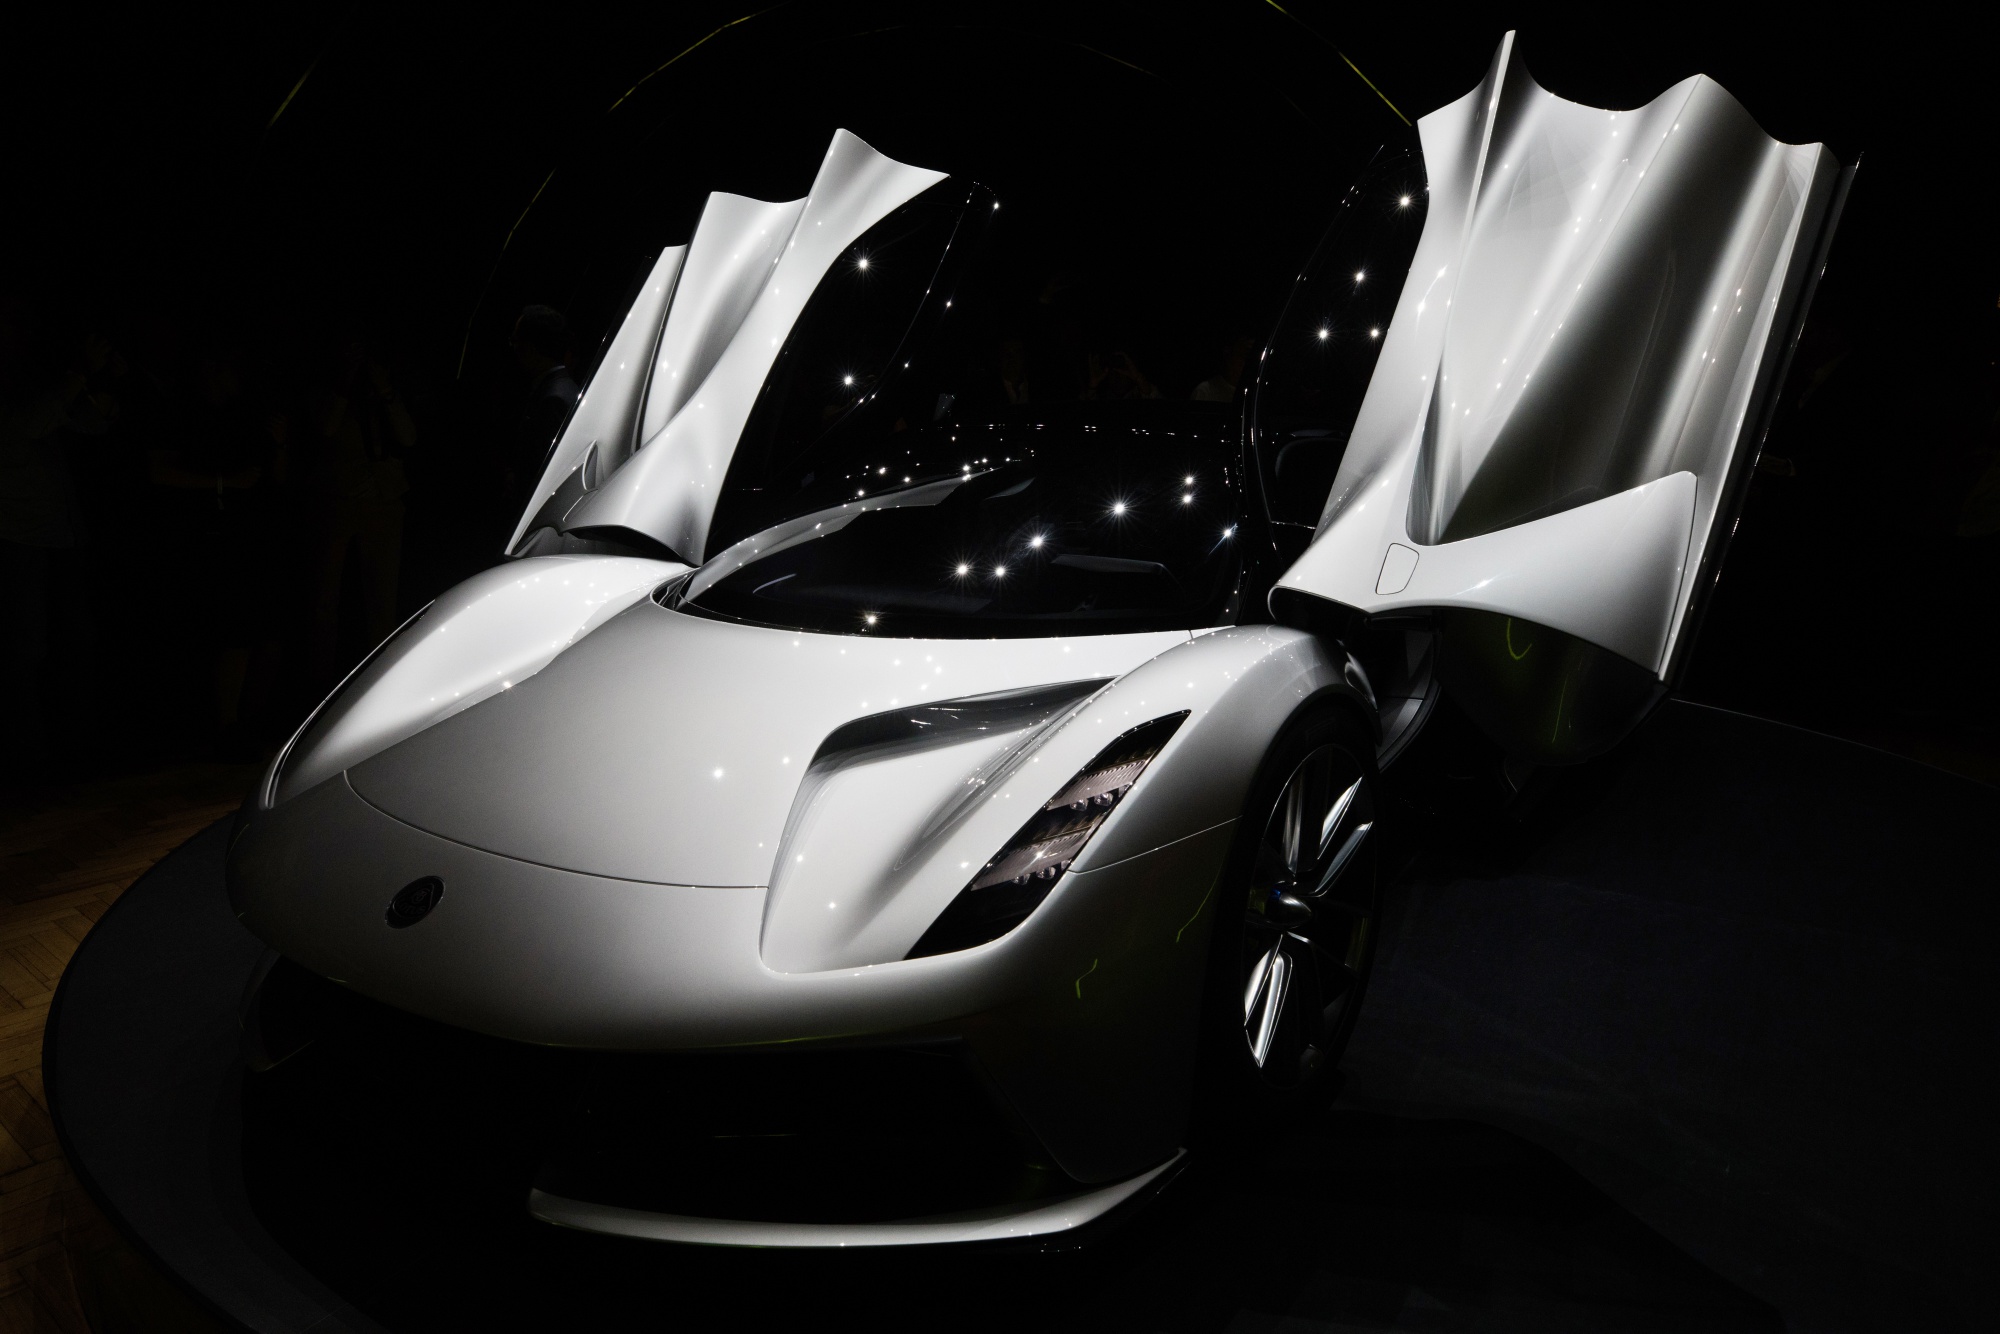 Luxury EV maker Lotus to go public through SPAC merger with L